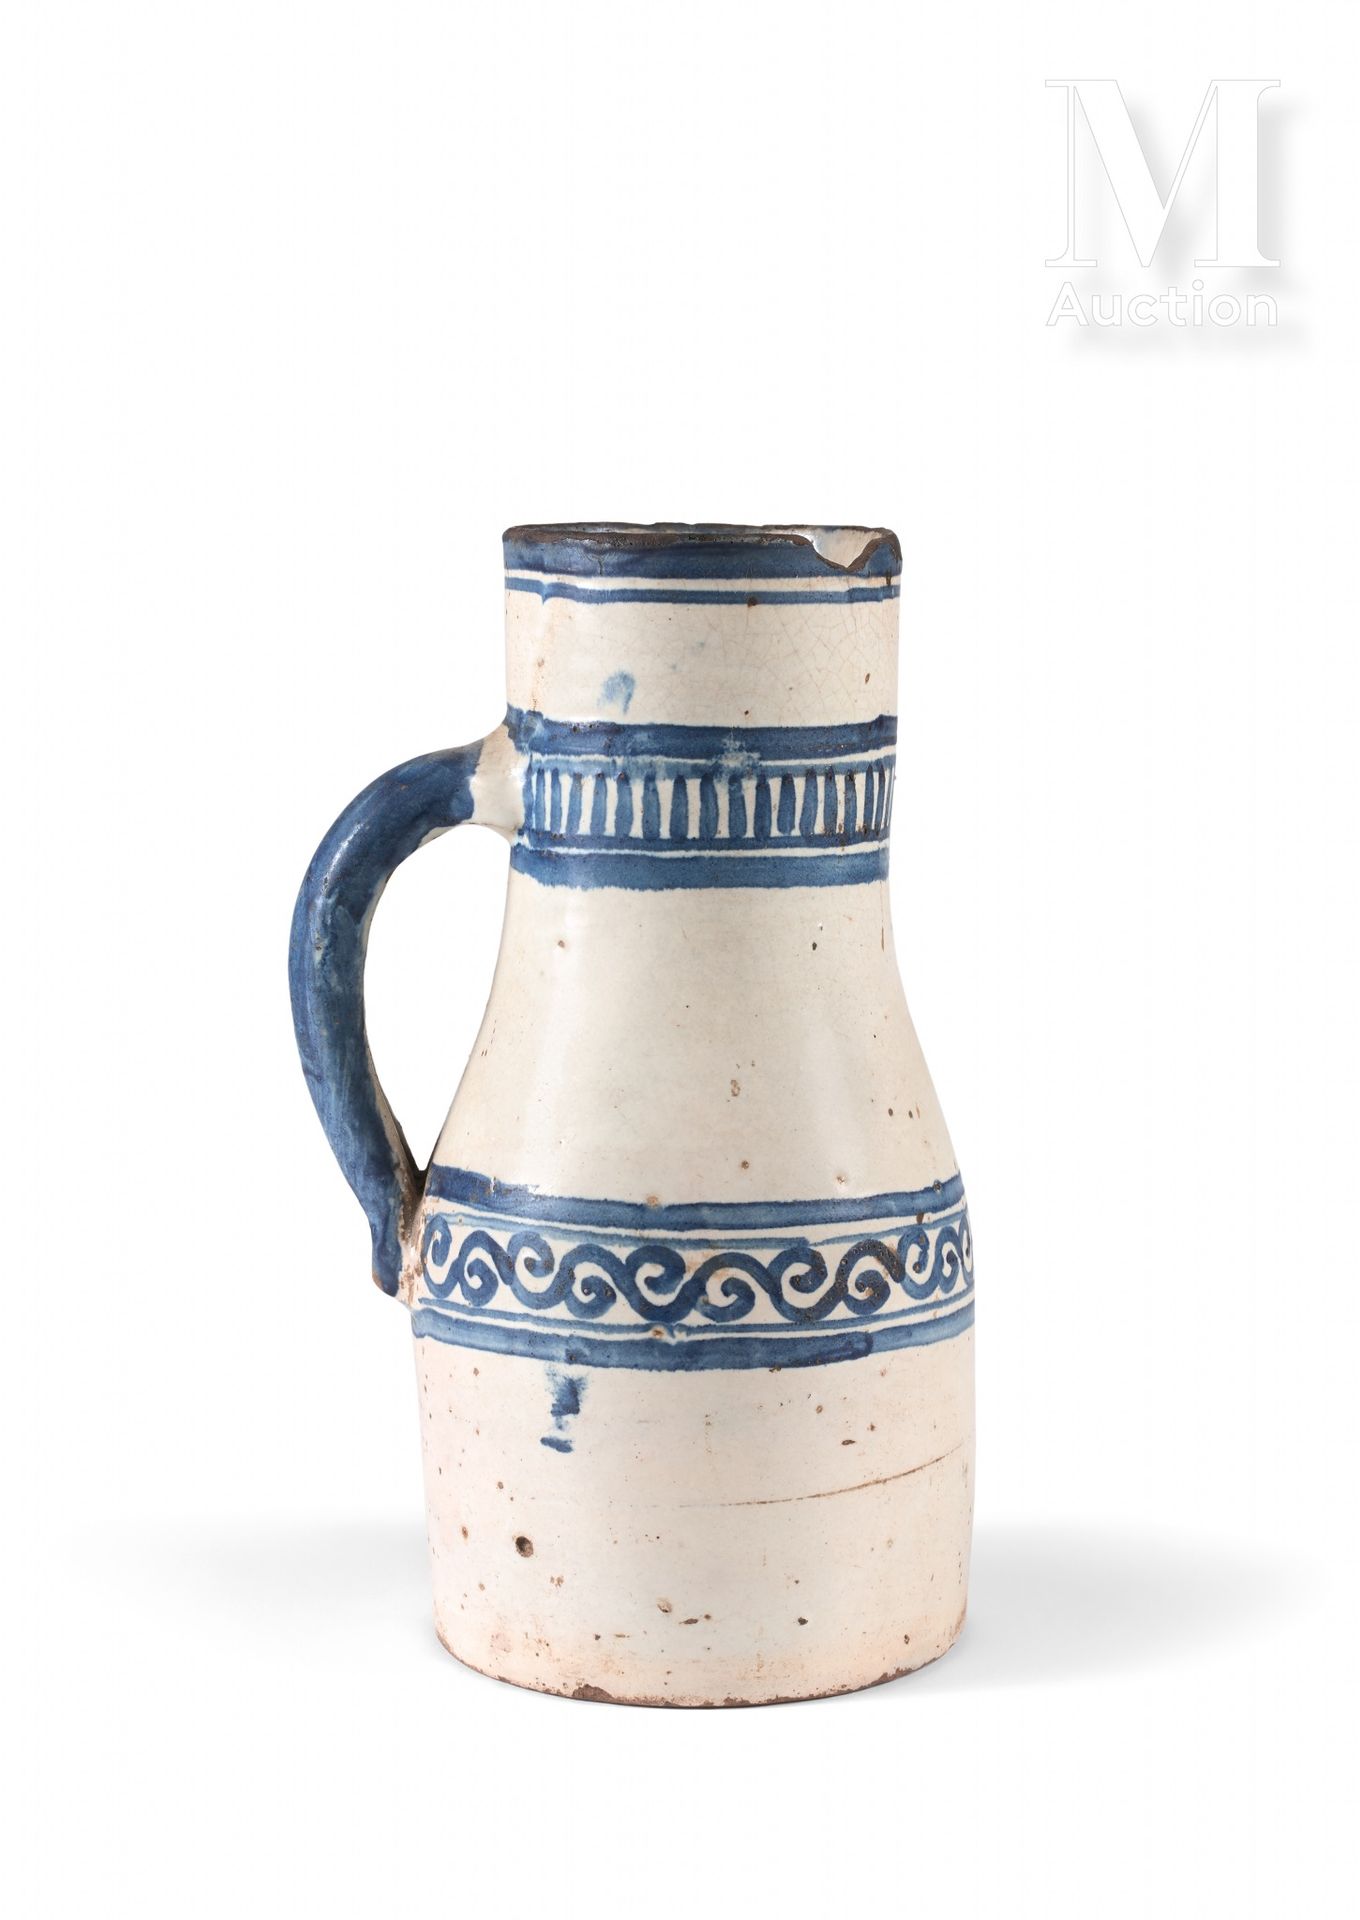 Berrada - Jarre à eau Marokko, Fes, 18. Jahrhundert

Jahrhundert. Keramikkrug mi&hellip;